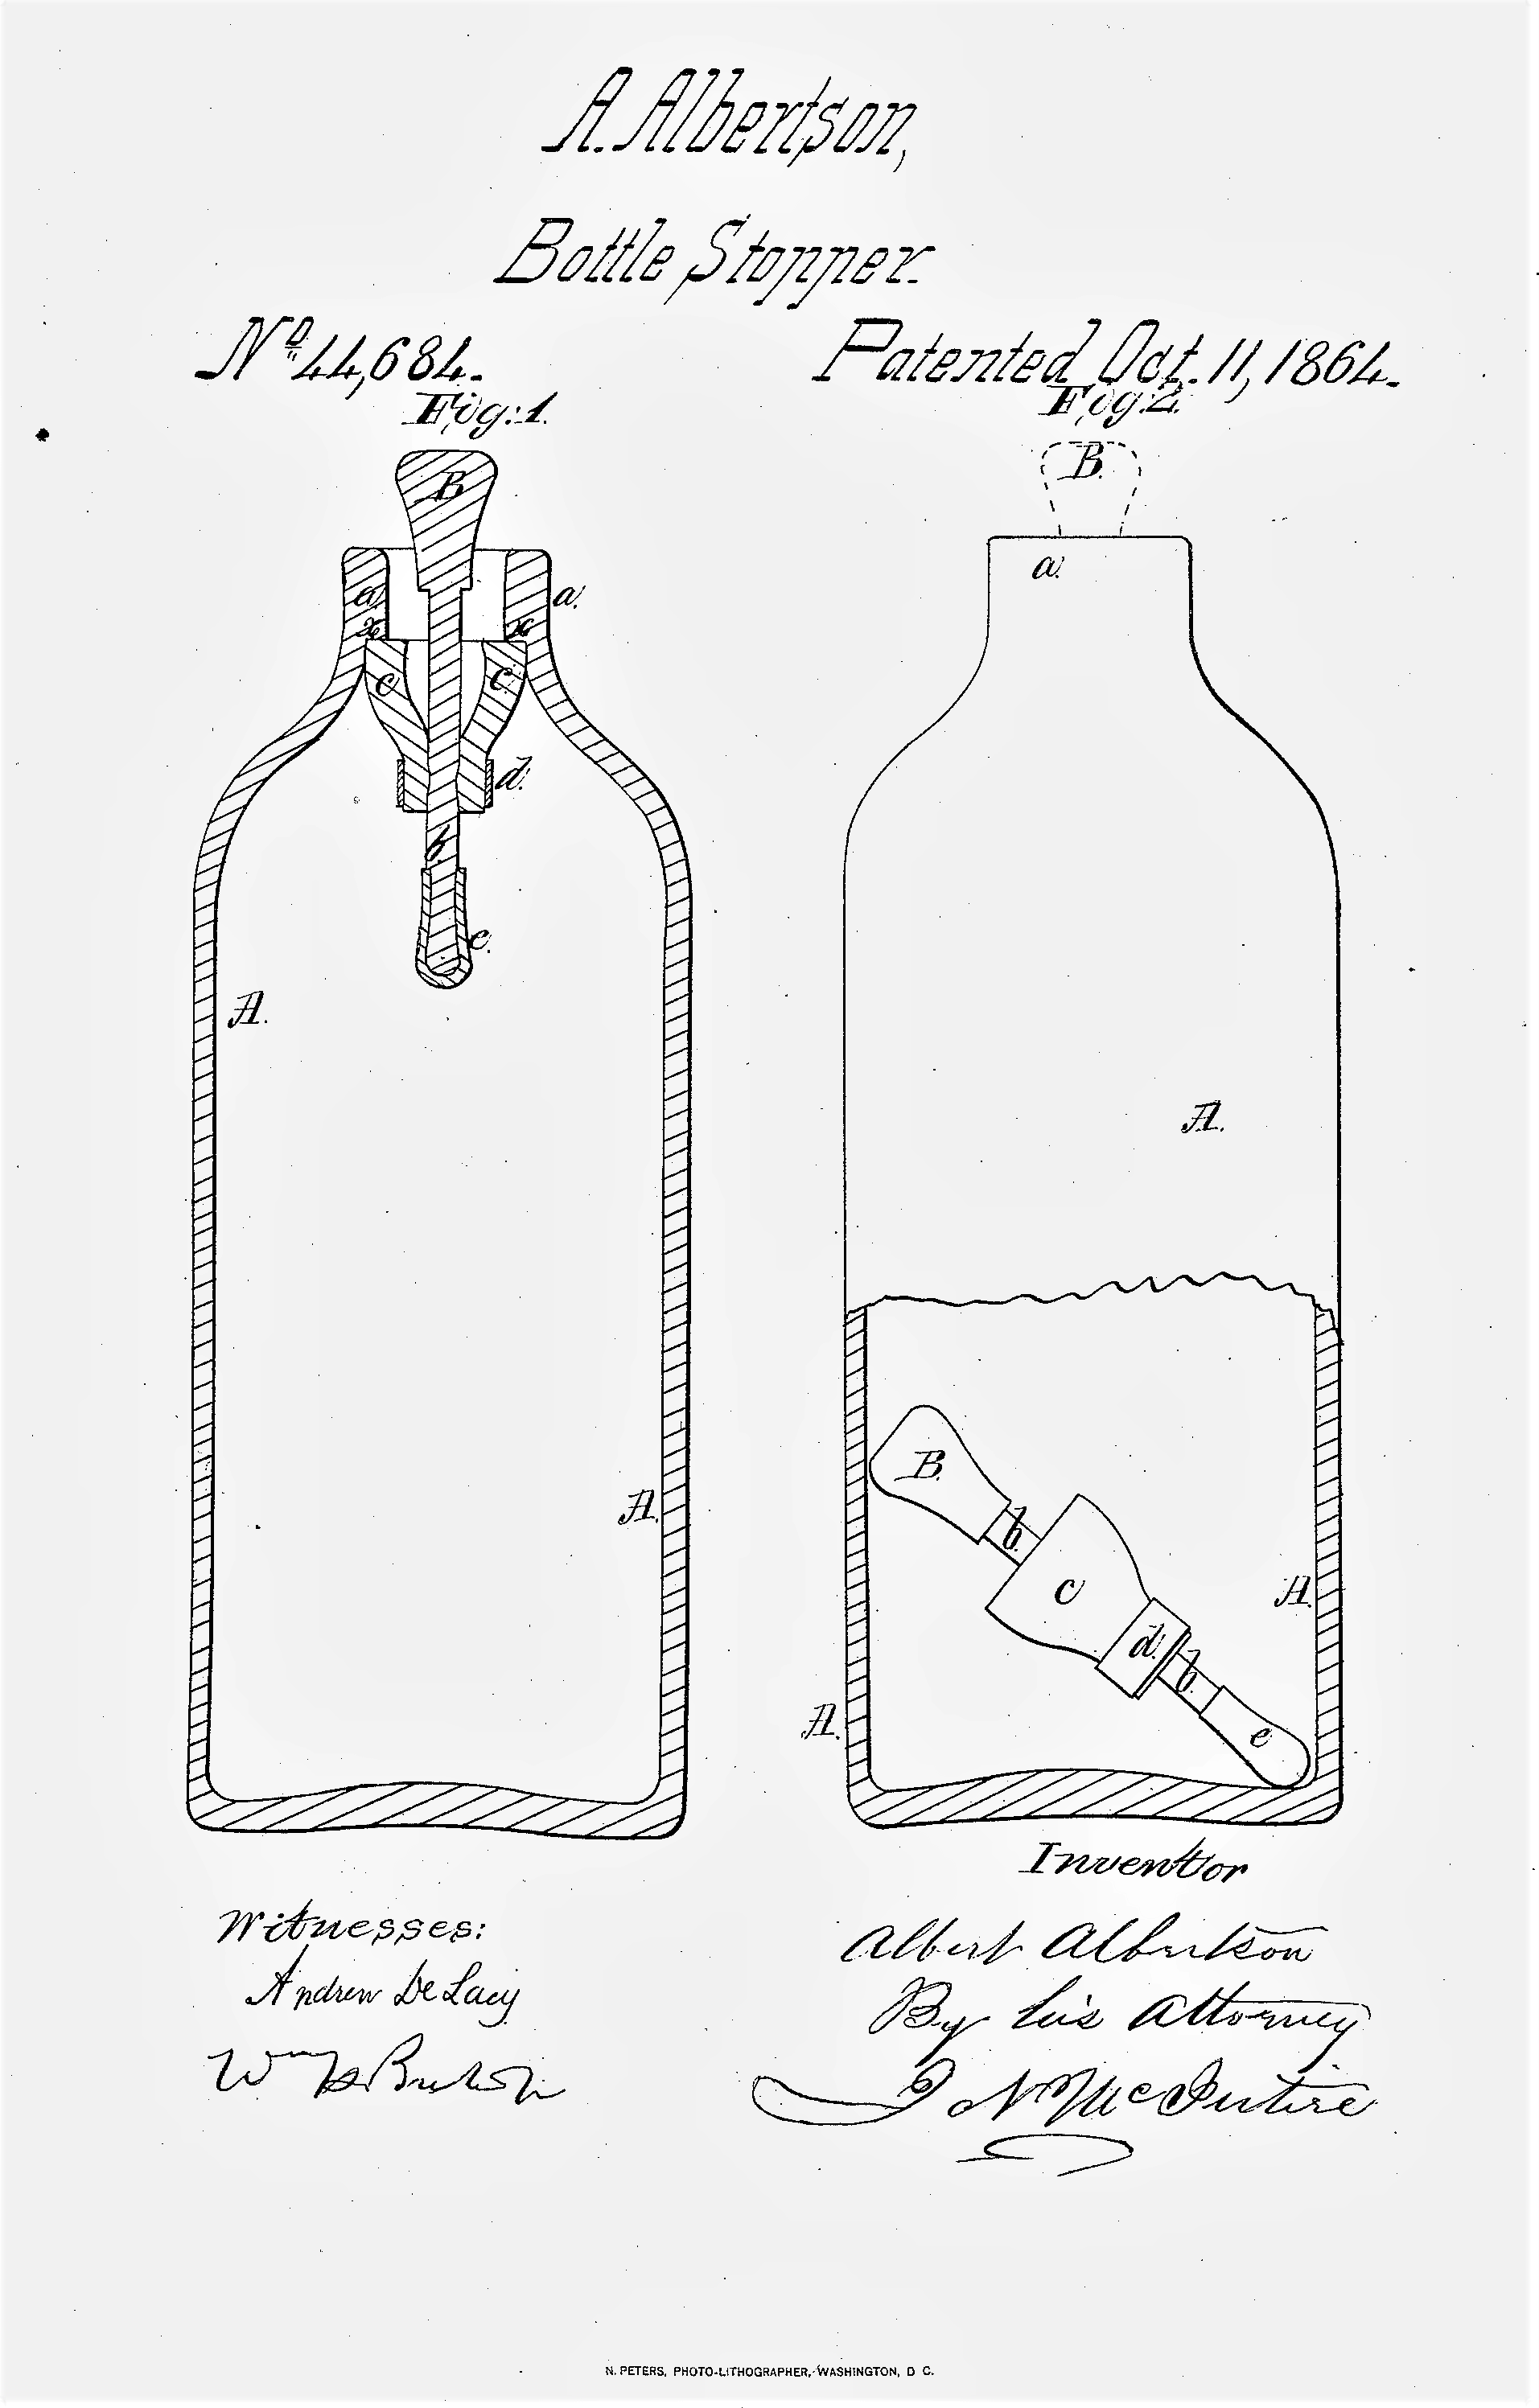 Albertson Bottle Stopper Patent 1864 Illustration.png